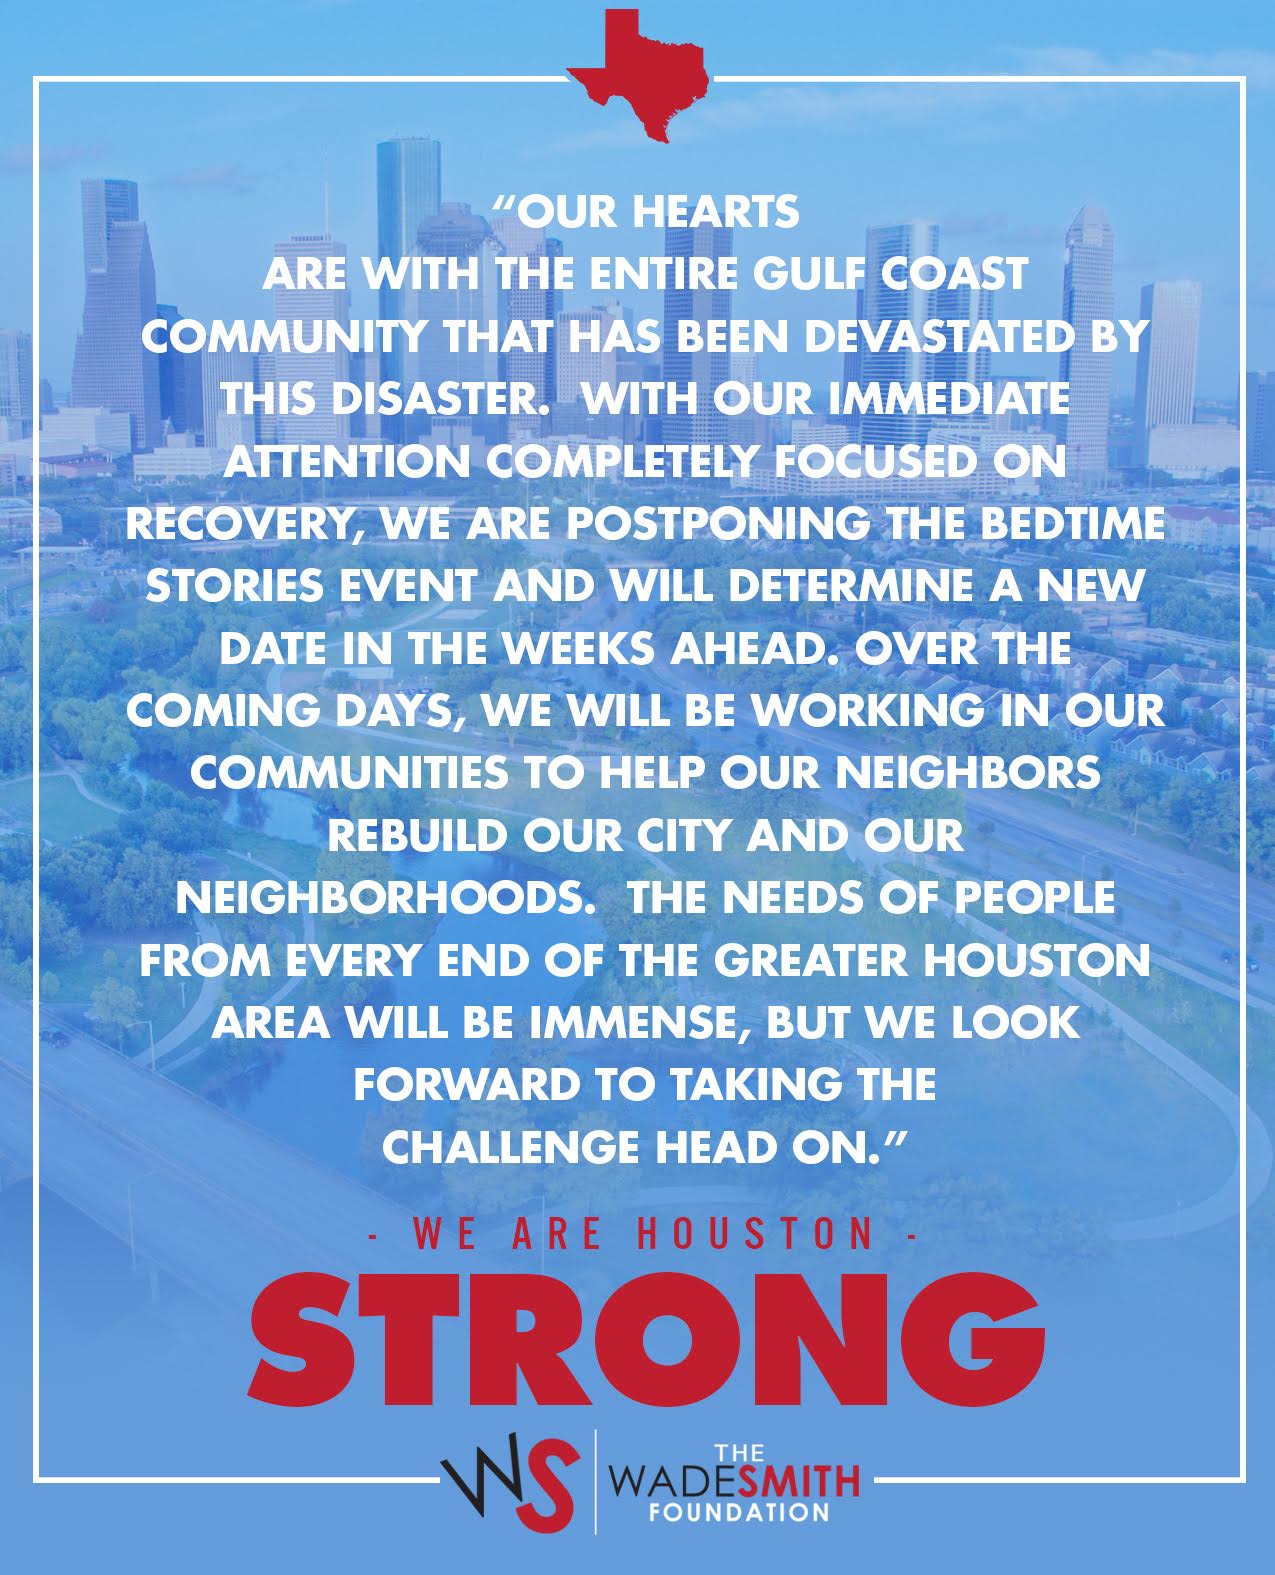 Houston Strong